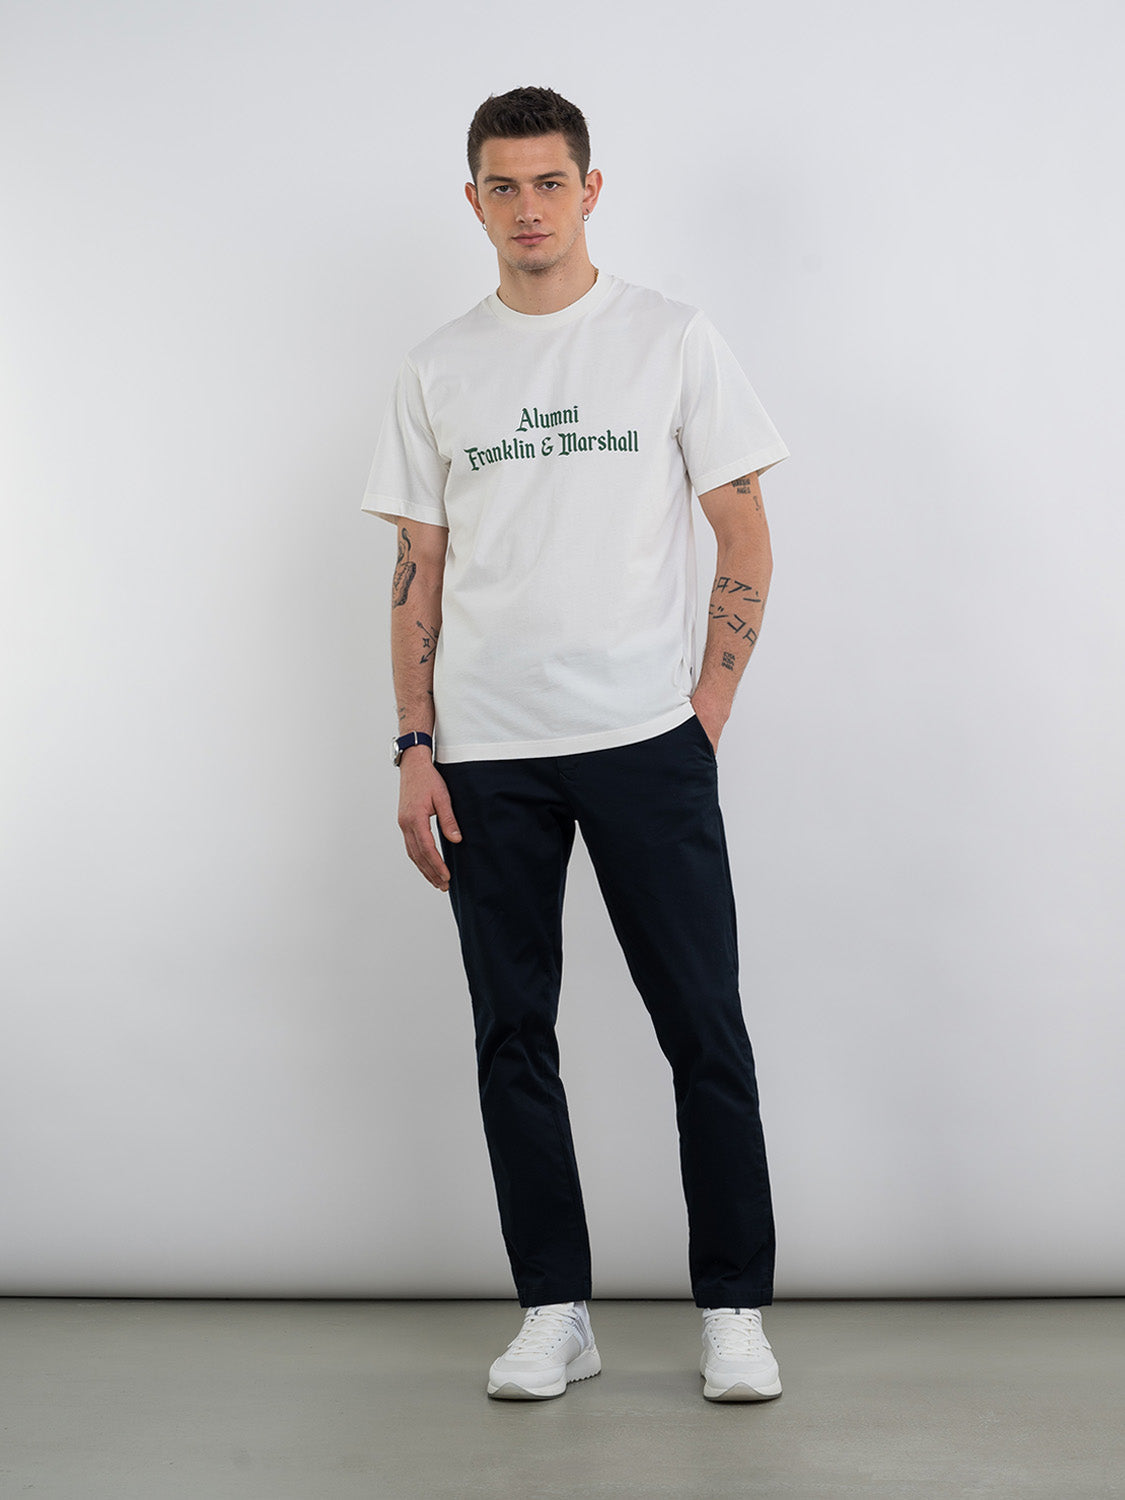 T-Shirt Franklin & Marshall con Stampa Alumni / Bianco - Ideal Moda